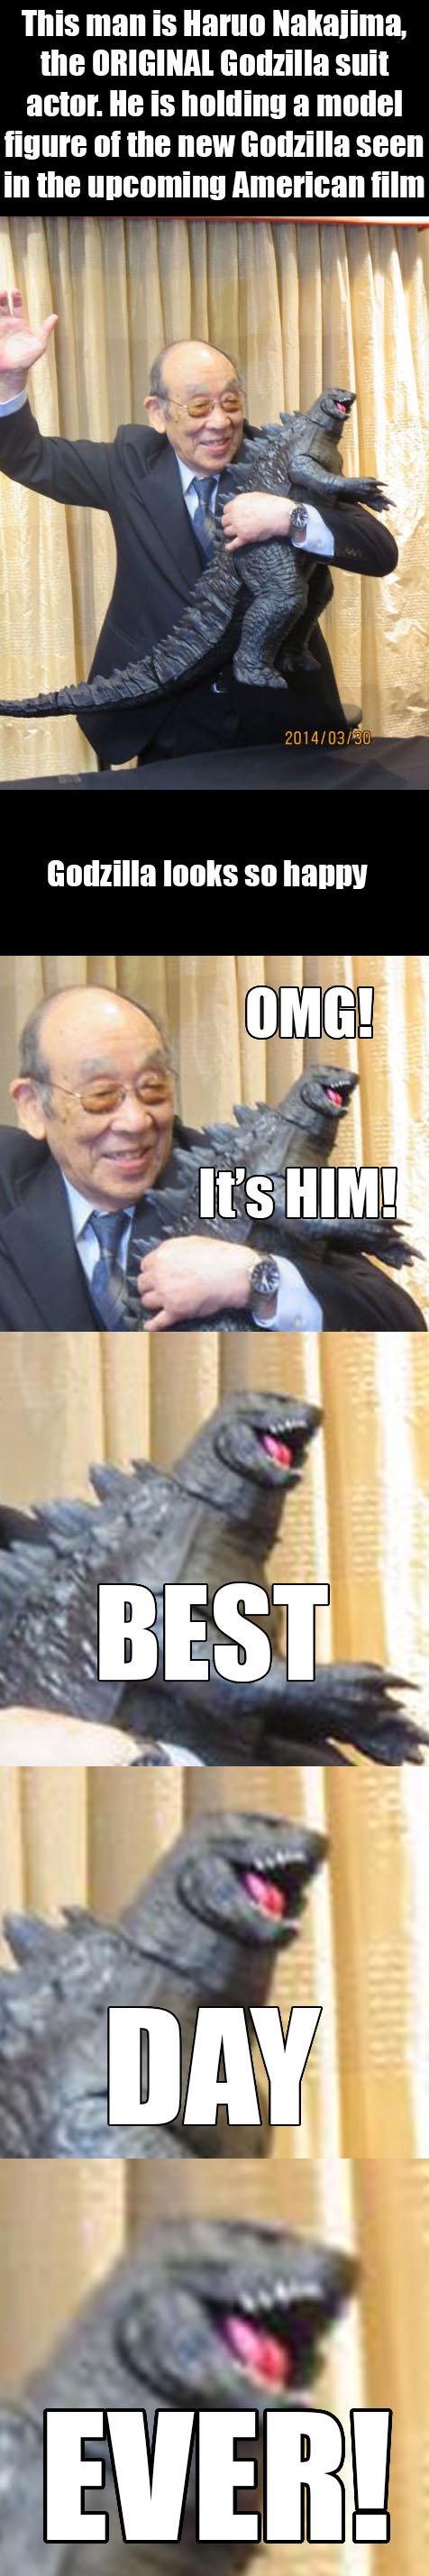 haruo nakajima meme - This man is Haruo Nakajima, the Original Godzilla suit actor. He is holding a model figure of the new Godzilla seen in the upcoming American film Godzilla looks so happy Omg! It's Him! Best Day Ever!